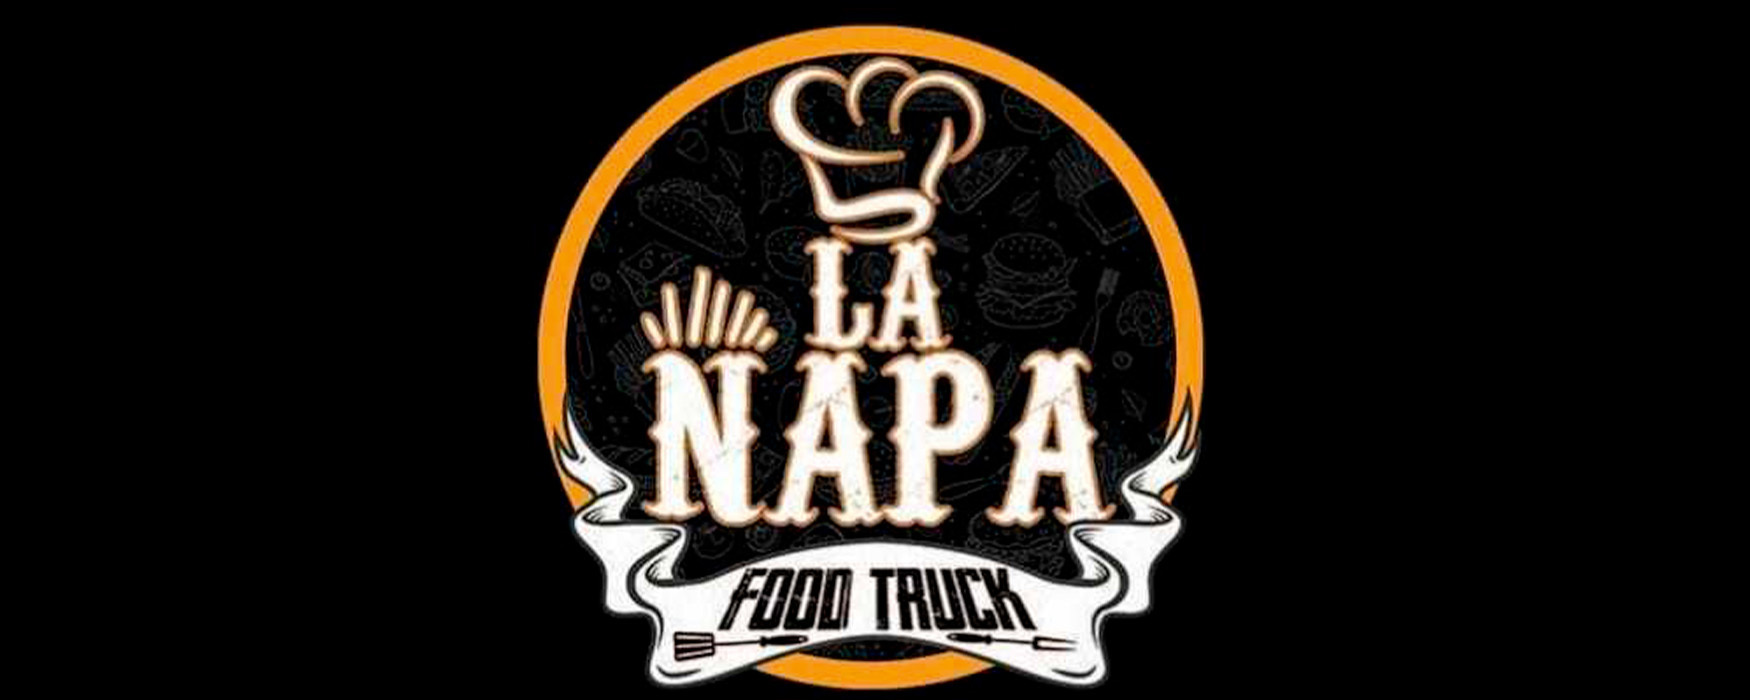 La Ñapa Food Truck